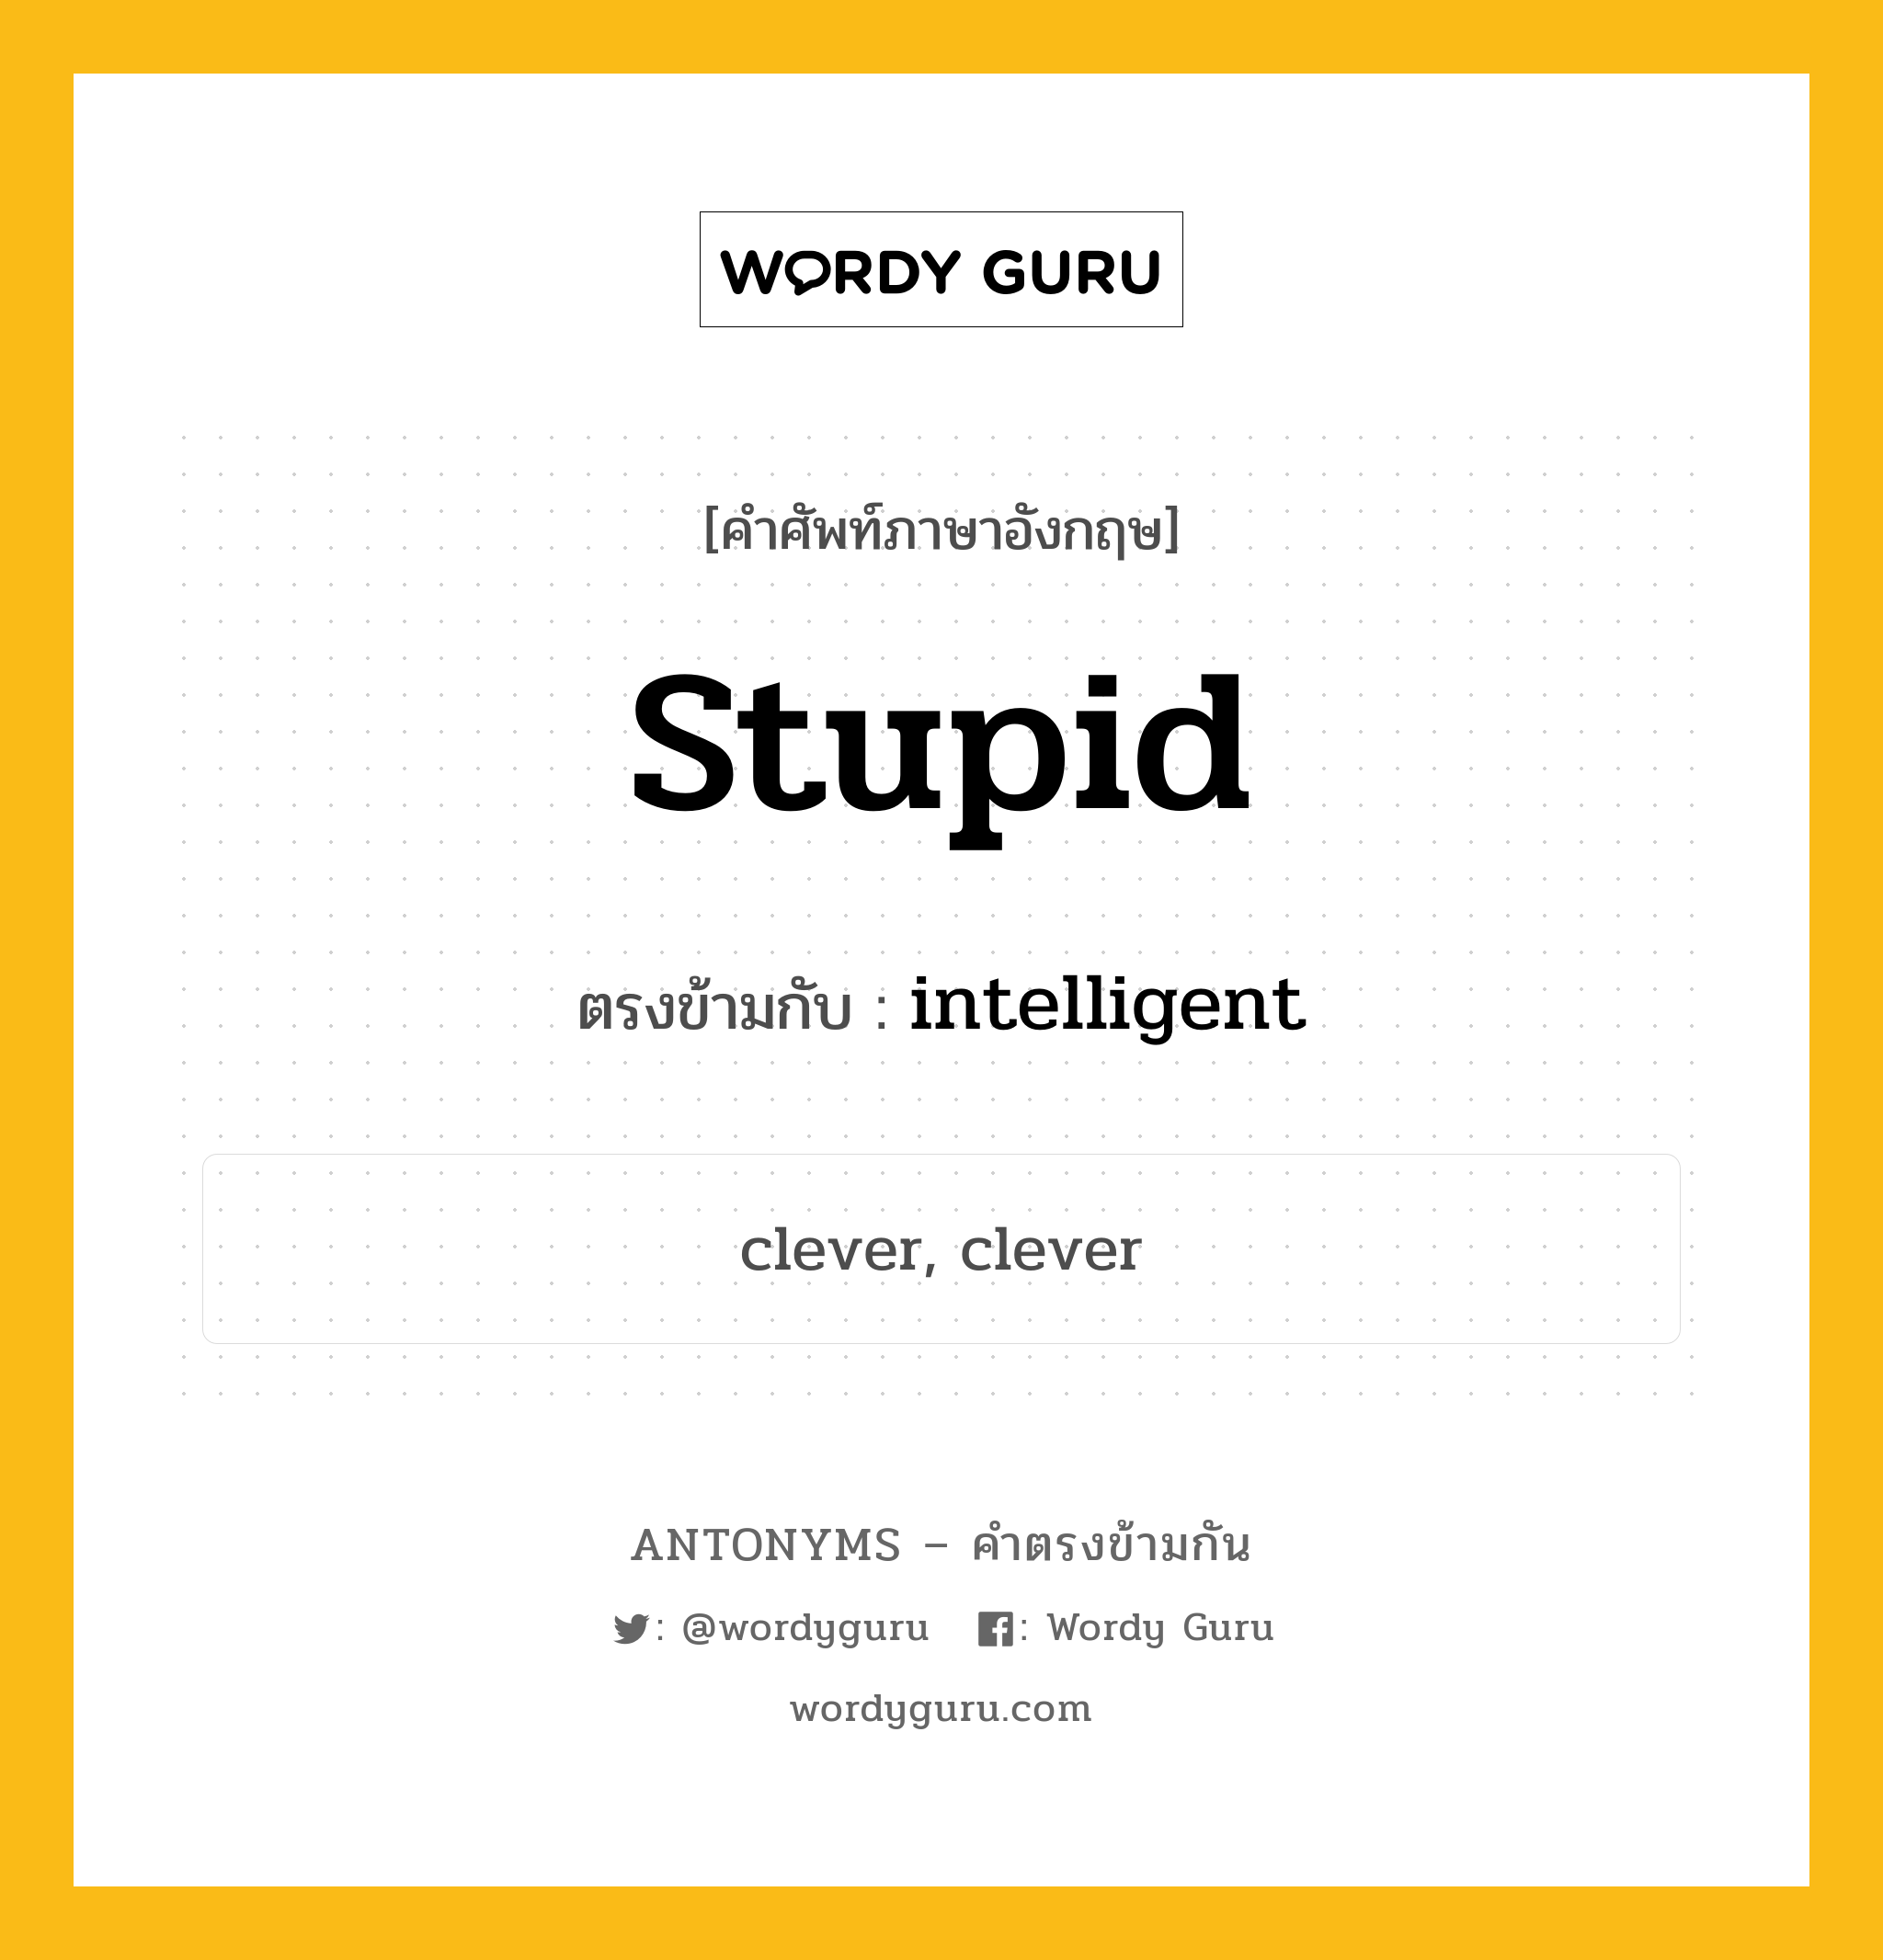 stupid เป็นคำตรงข้ามกับคำไหนบ้าง?, คำศัพท์ภาษาอังกฤษ stupid ตรงข้ามกับ intelligent หมวด intelligent